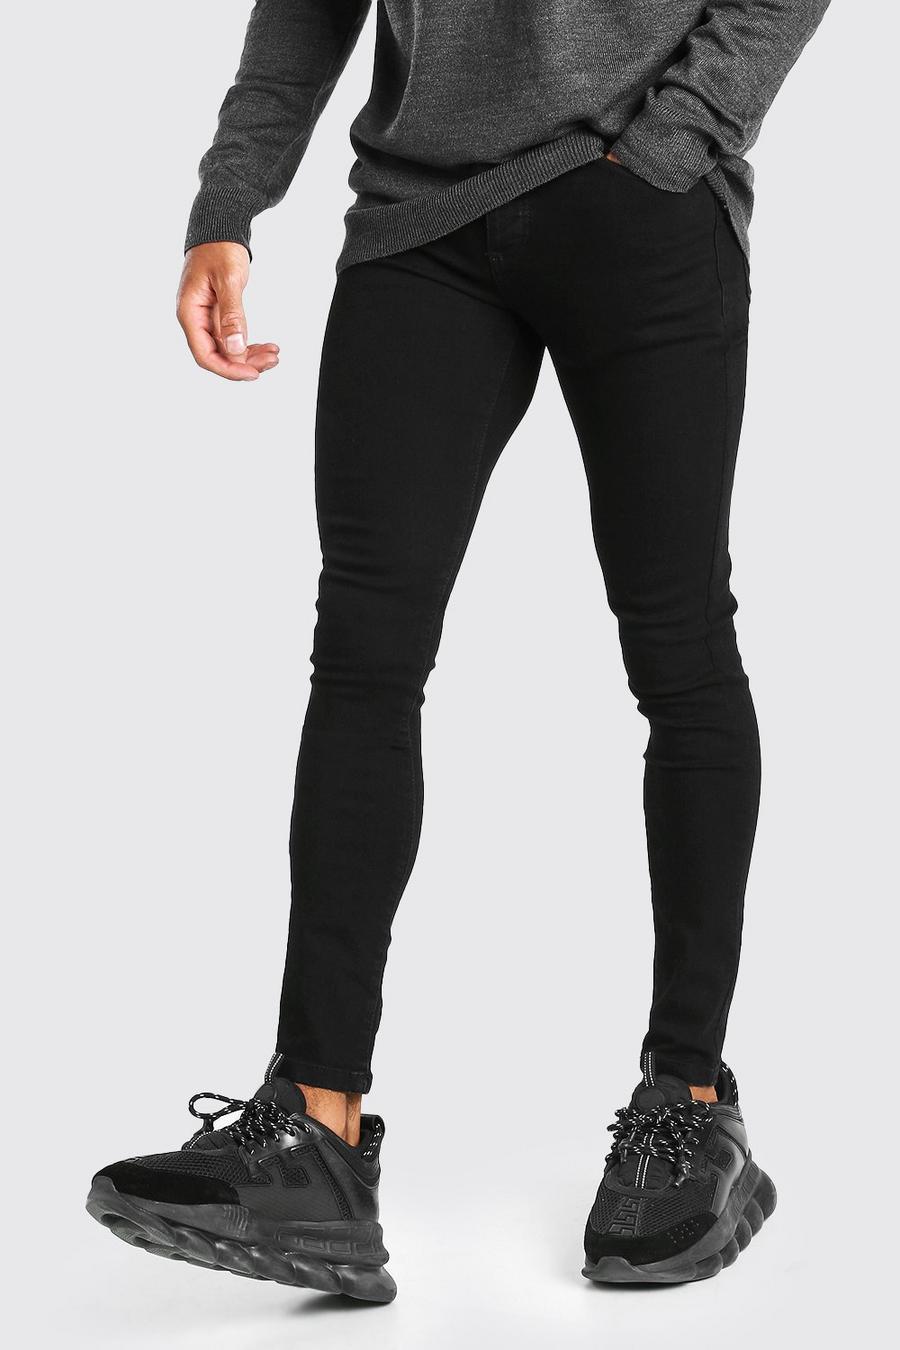 Jeans Super Skinny Fit, Nero black